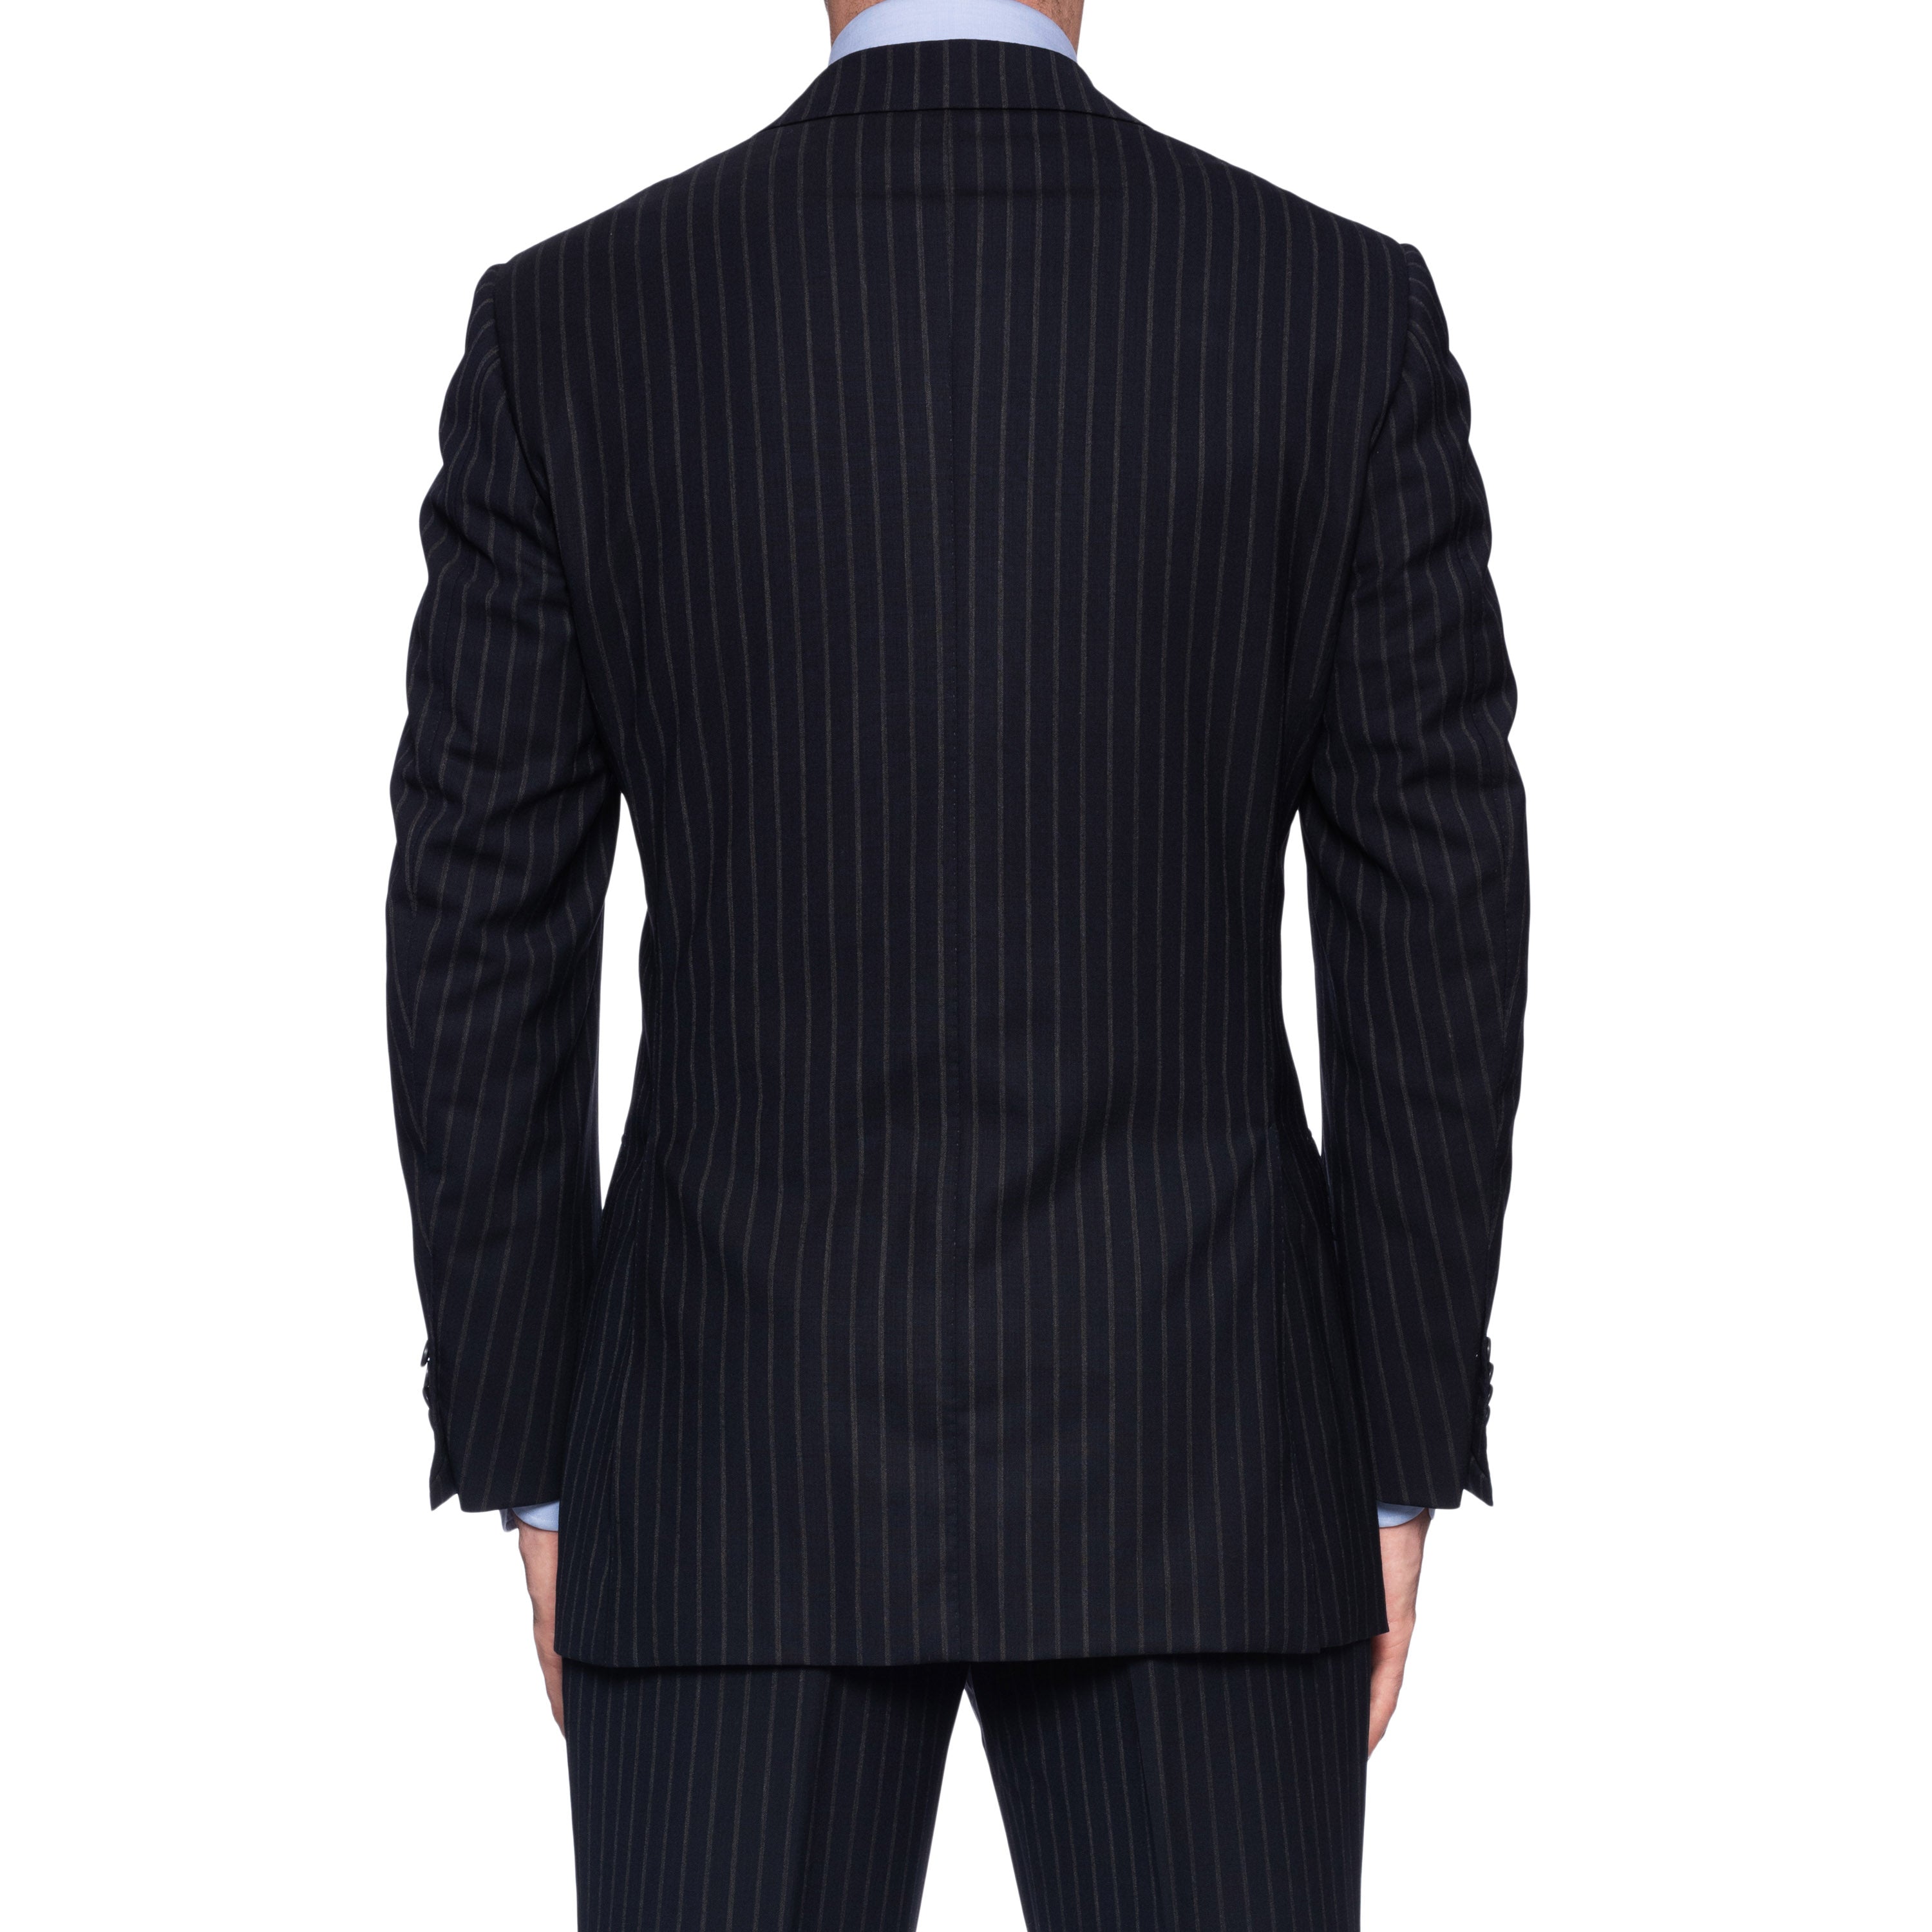 SARTORIA CASTANGIA Navy Blue Striped Wool Super 110's Suit EU 50 NEW US 40 CASTANGIA